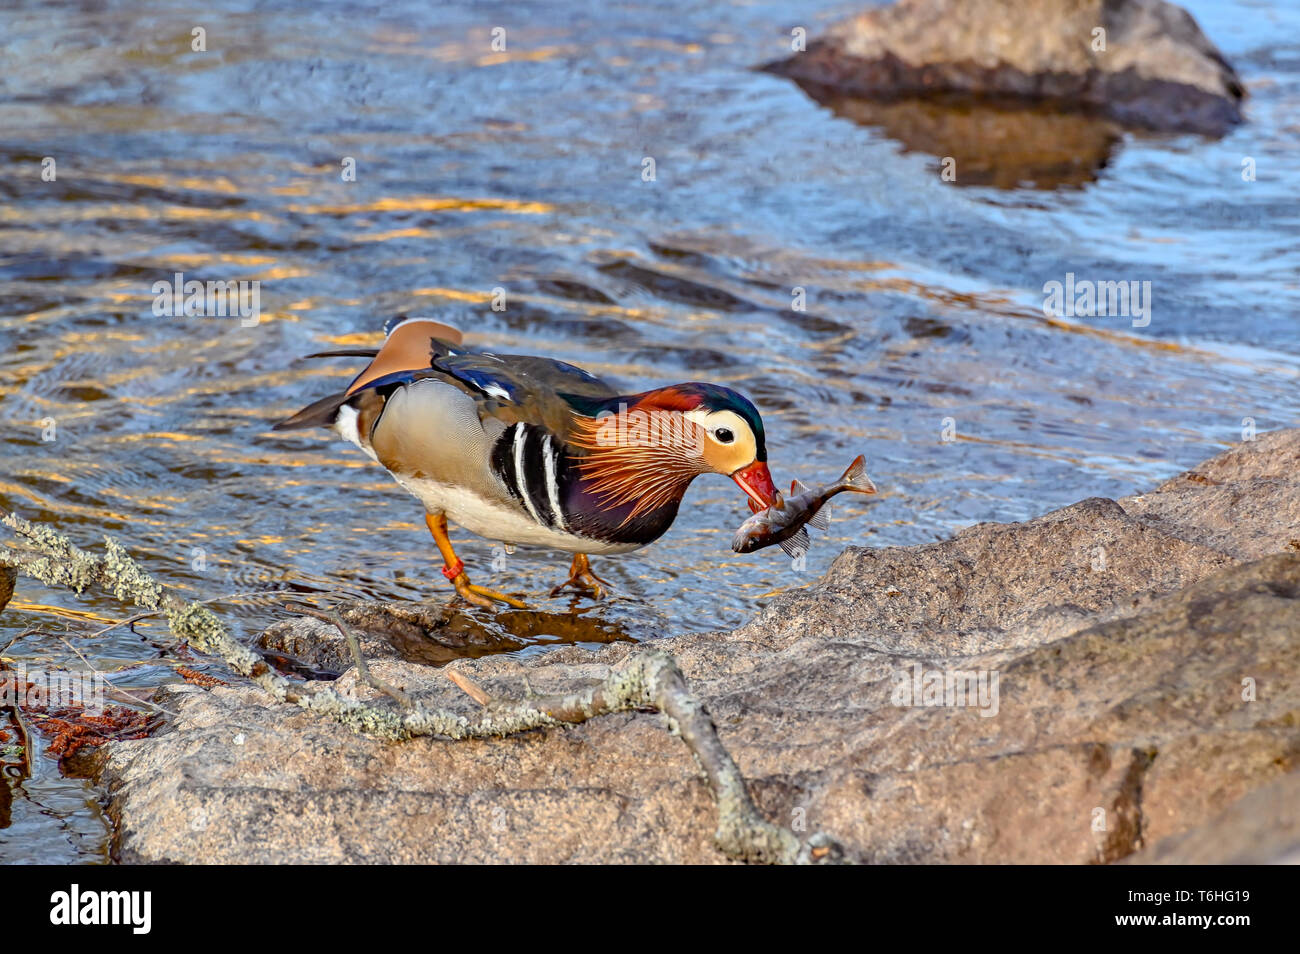 Mandarin duck with a fish in his beak  Stock Photo